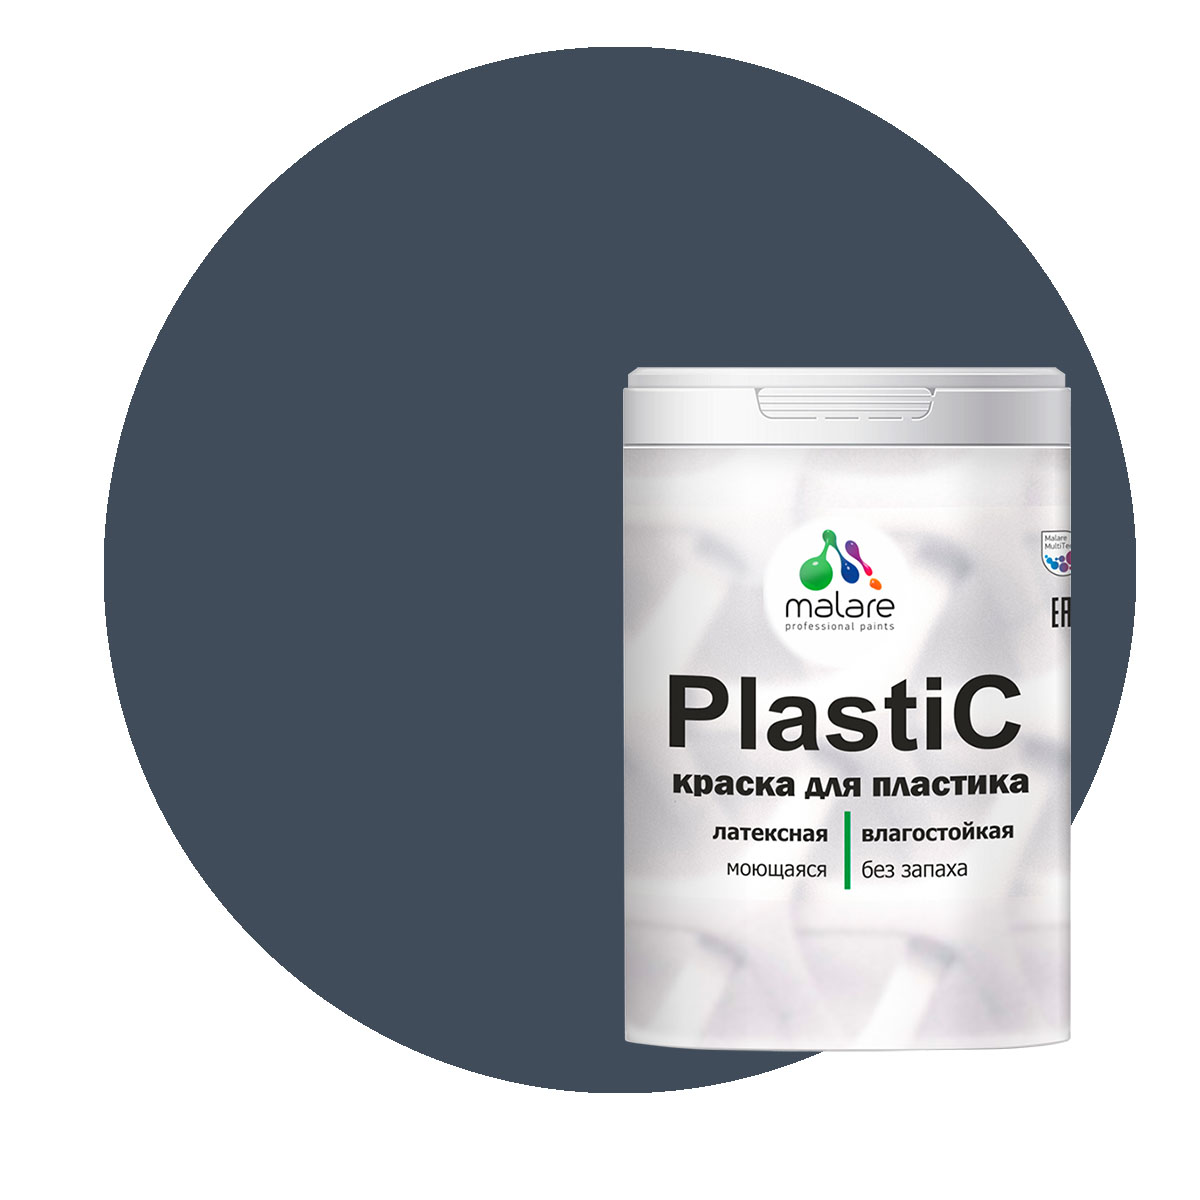 Краска Malare PlastiC для пластика, ПВХ, для сайдинга, гранитный, 2 кг. краска malare plastic для пластика пвх для сайдинга белый 1 кг